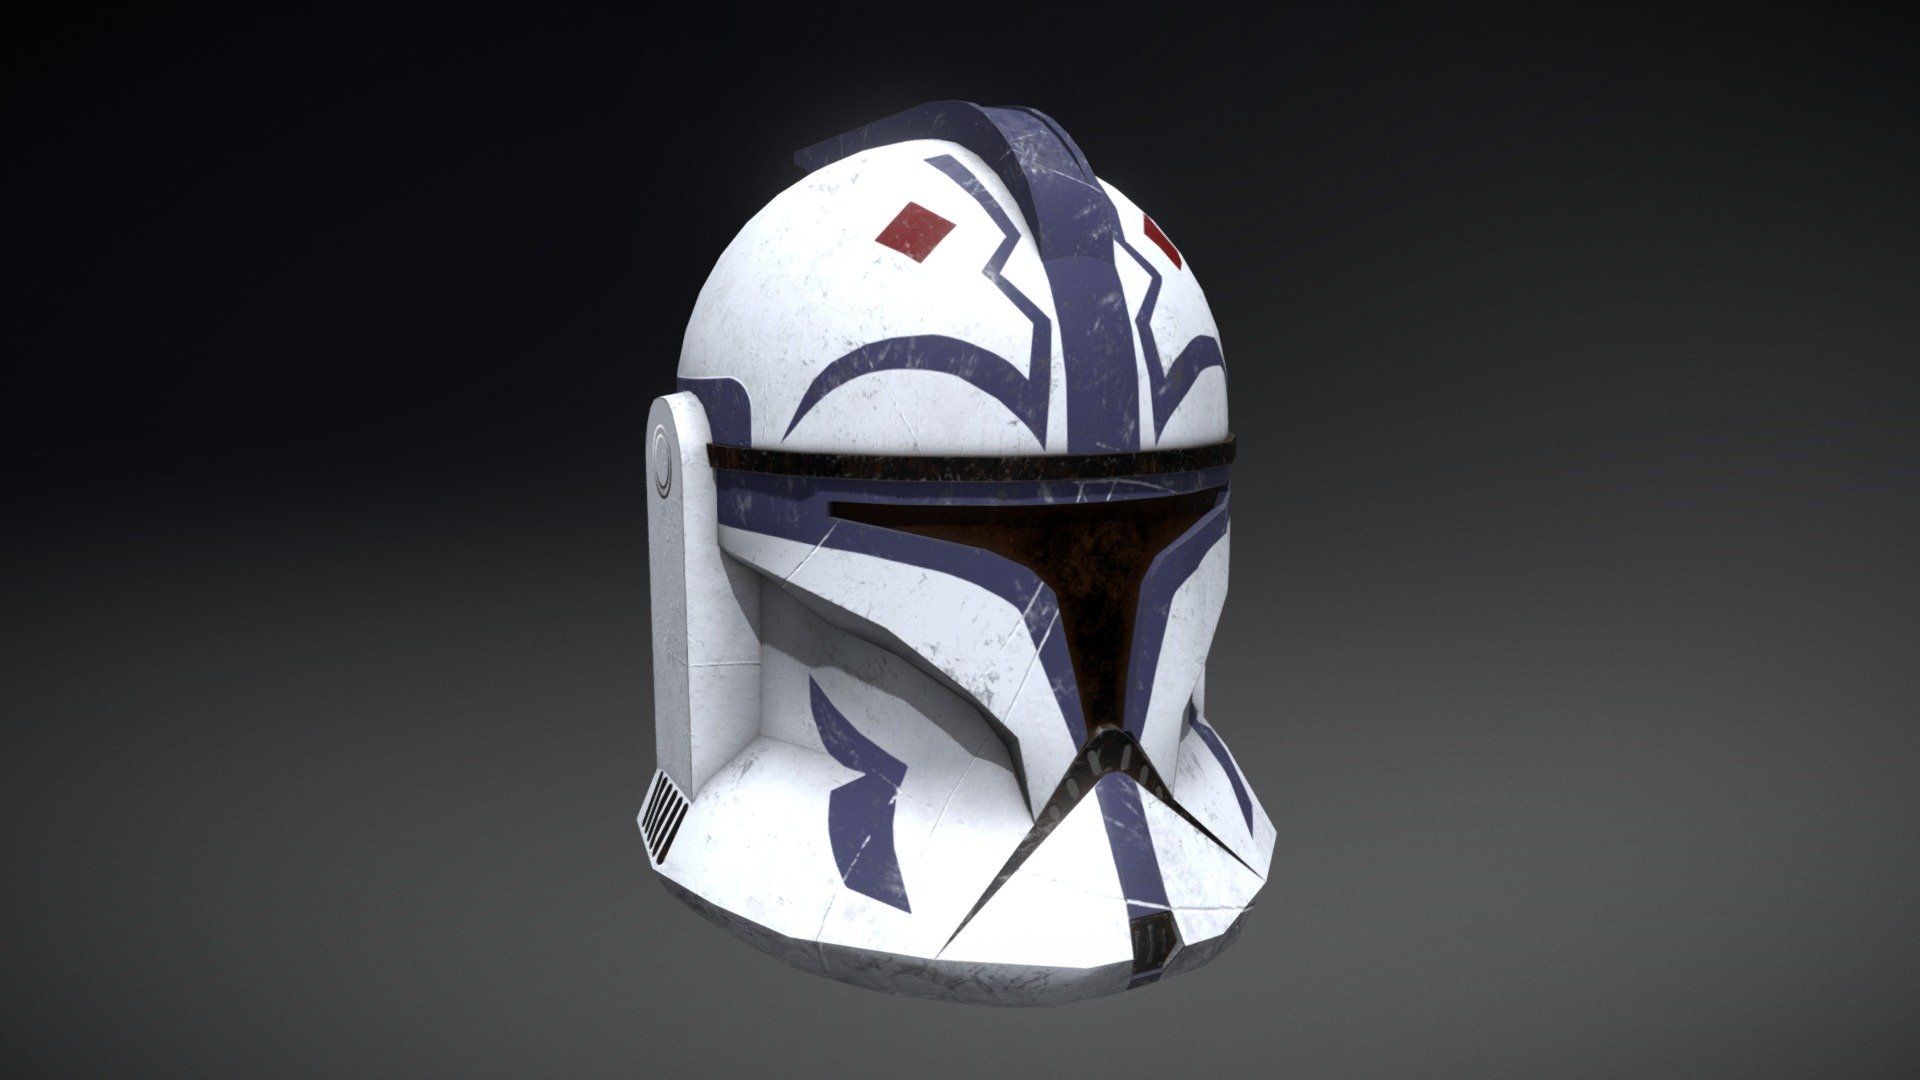 Clone Trooper Helmet model by seborn [73f71a4]